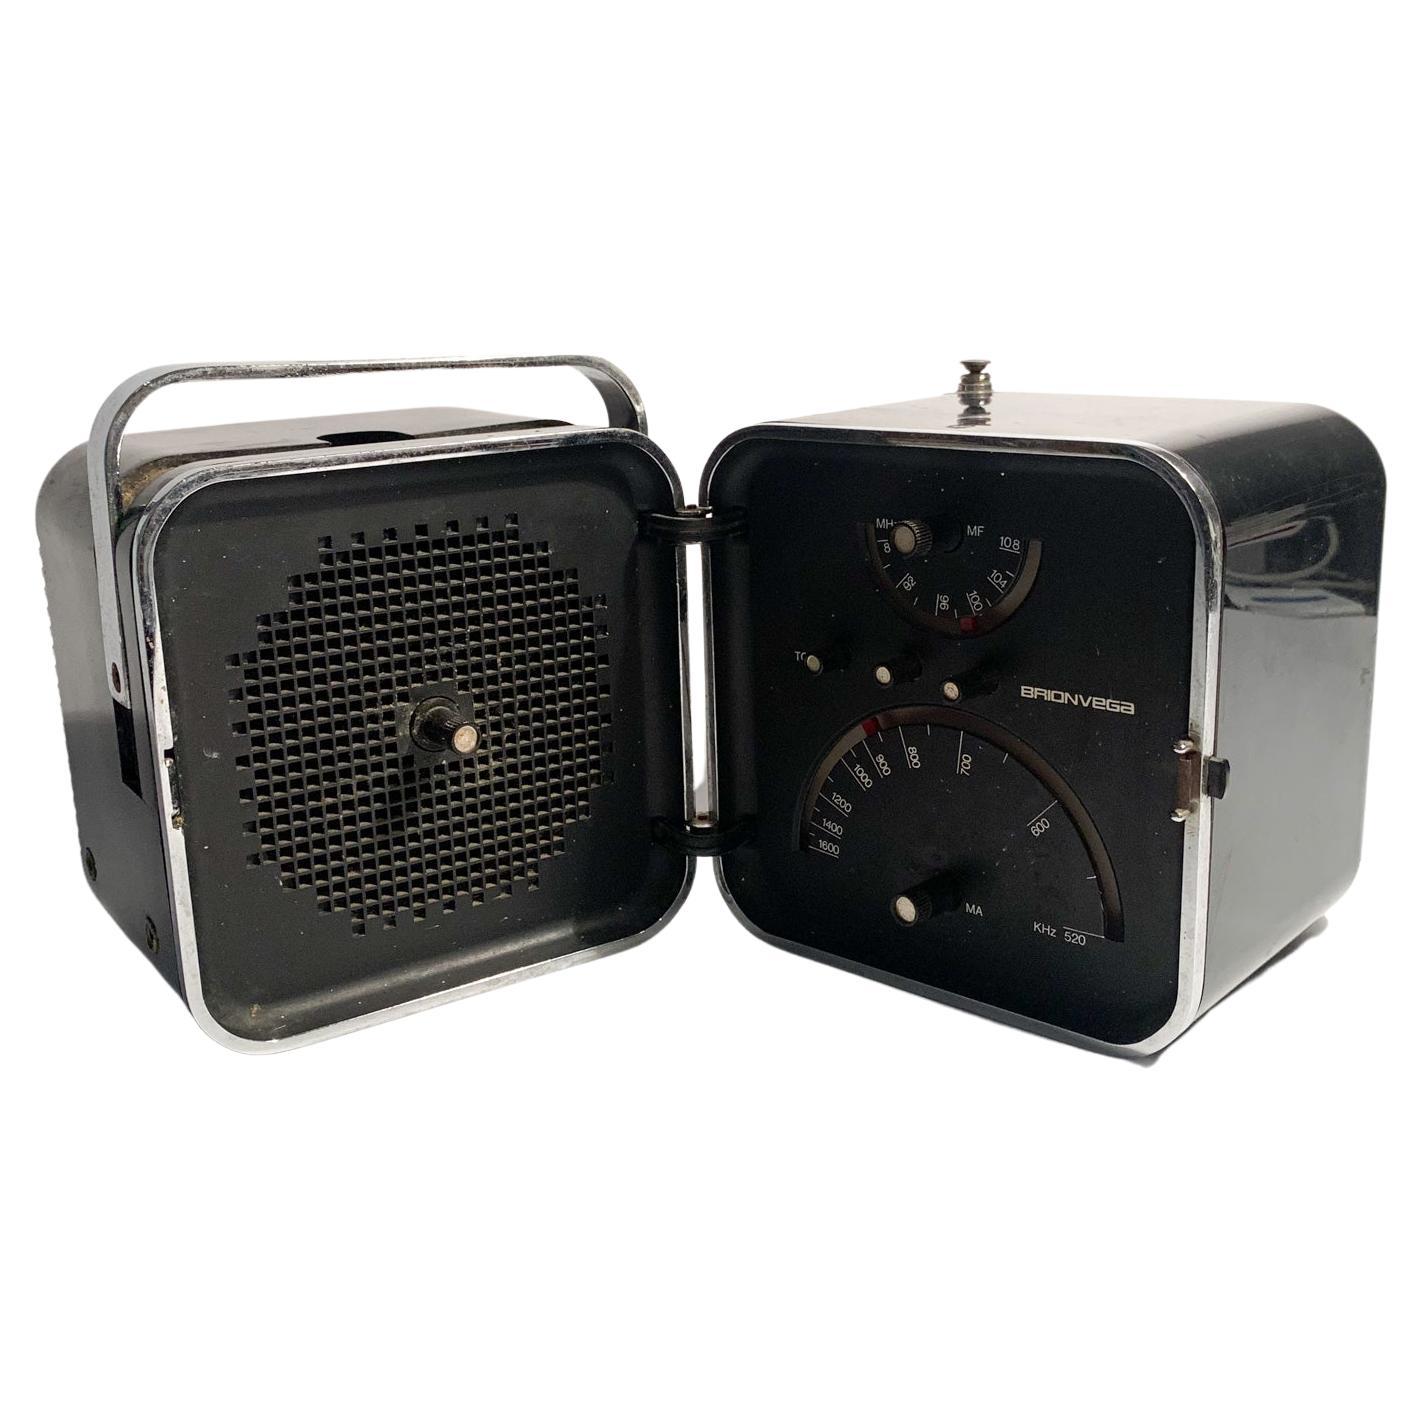 Radio Cubo Brionvega Black Designed by Richard Sapper and Marco Zanuso